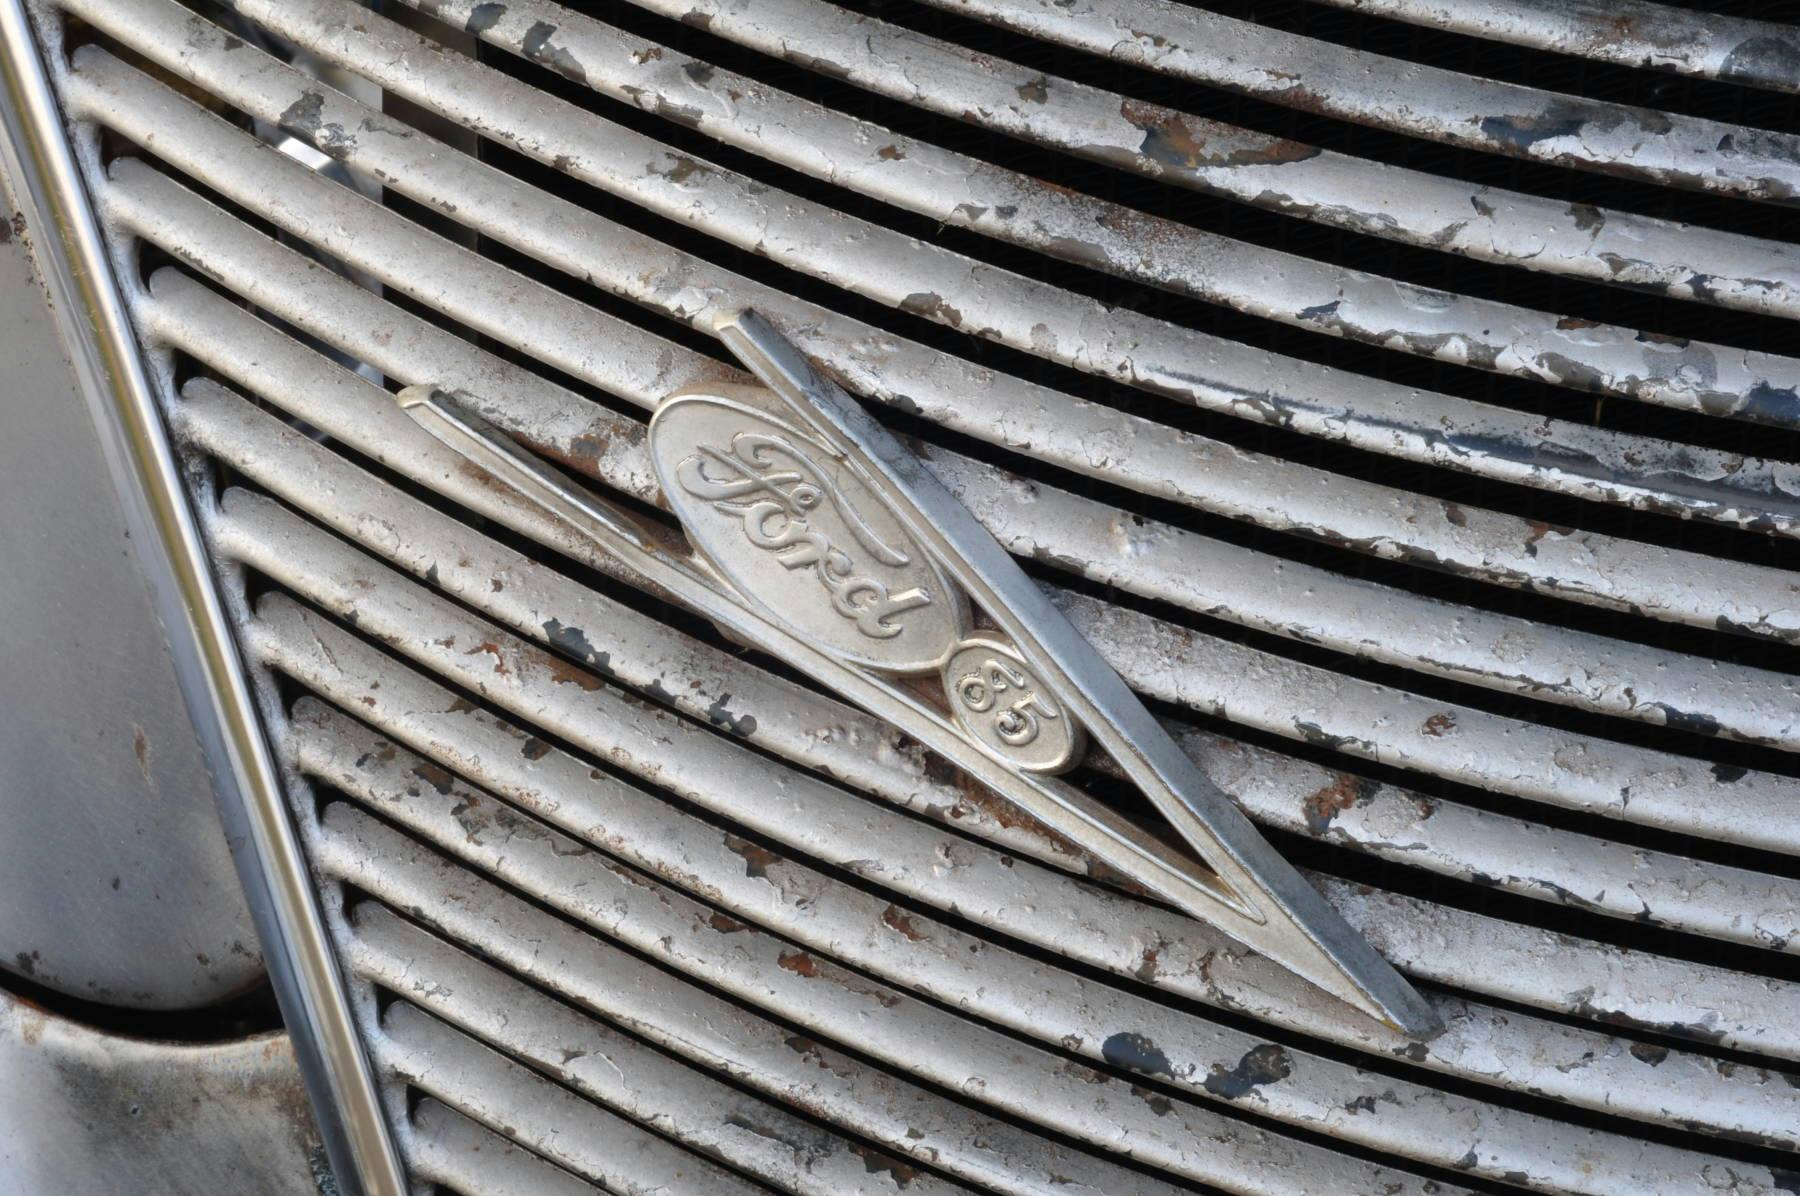 1937 Ford Model 78 Slantback Tudor Hot Rod badge